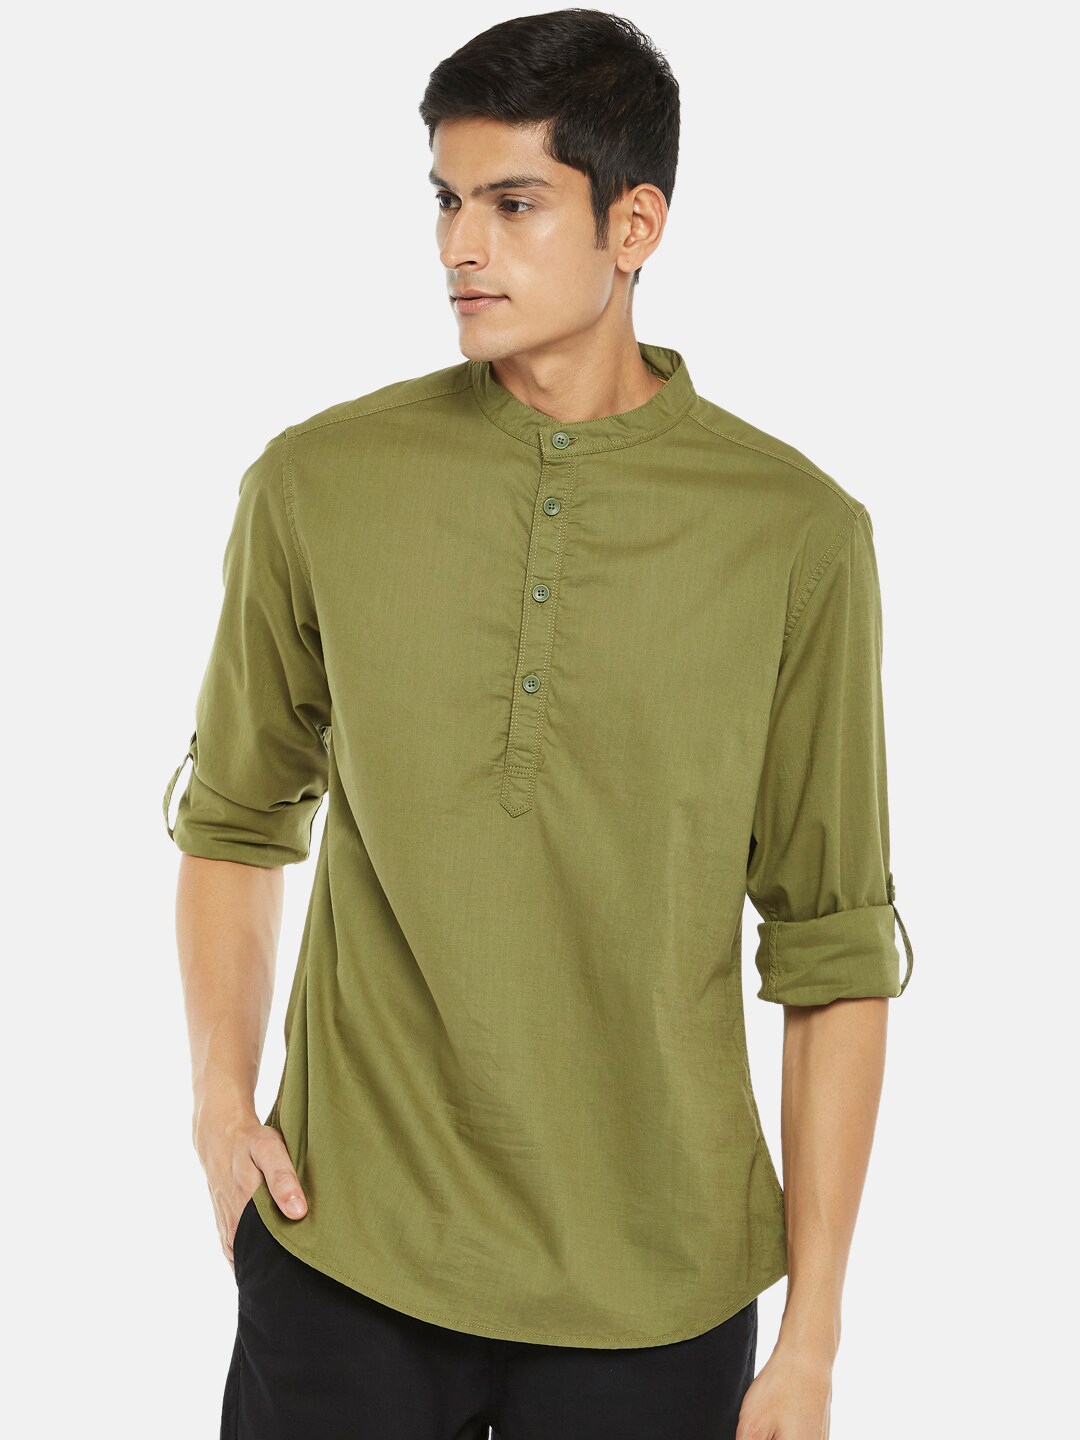 Buy Urban Ranger By Pantaloons Men Olive Green Cotton Casual Shirt ...